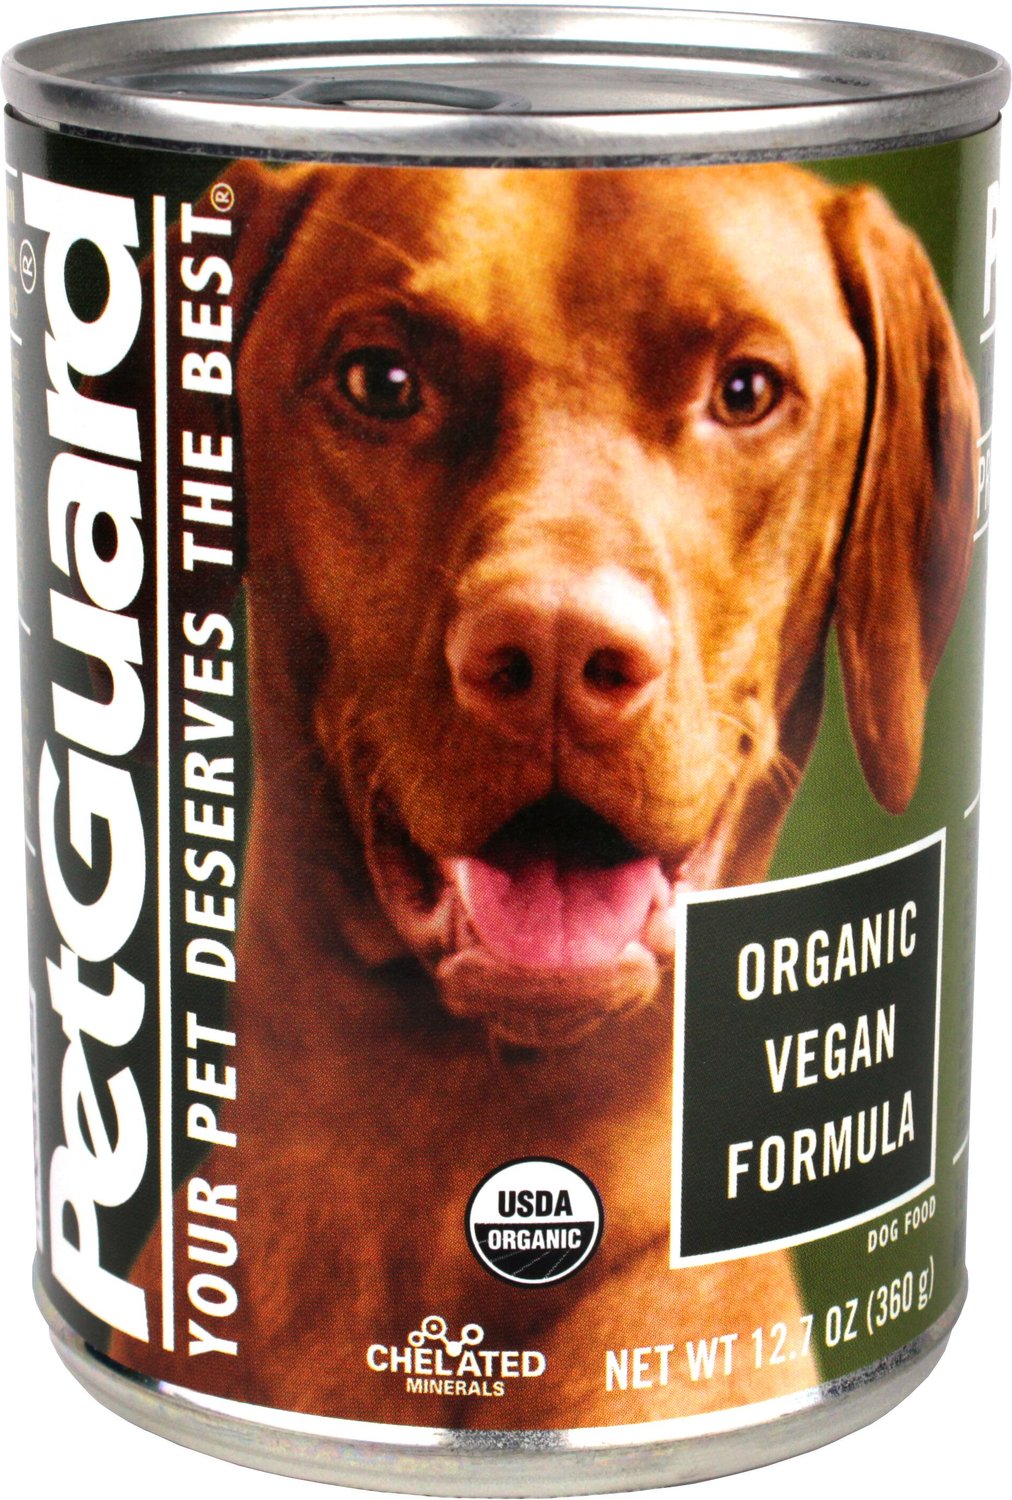 PetGuard Organic Vegan Formula Canned Dog Food, 12.7oz